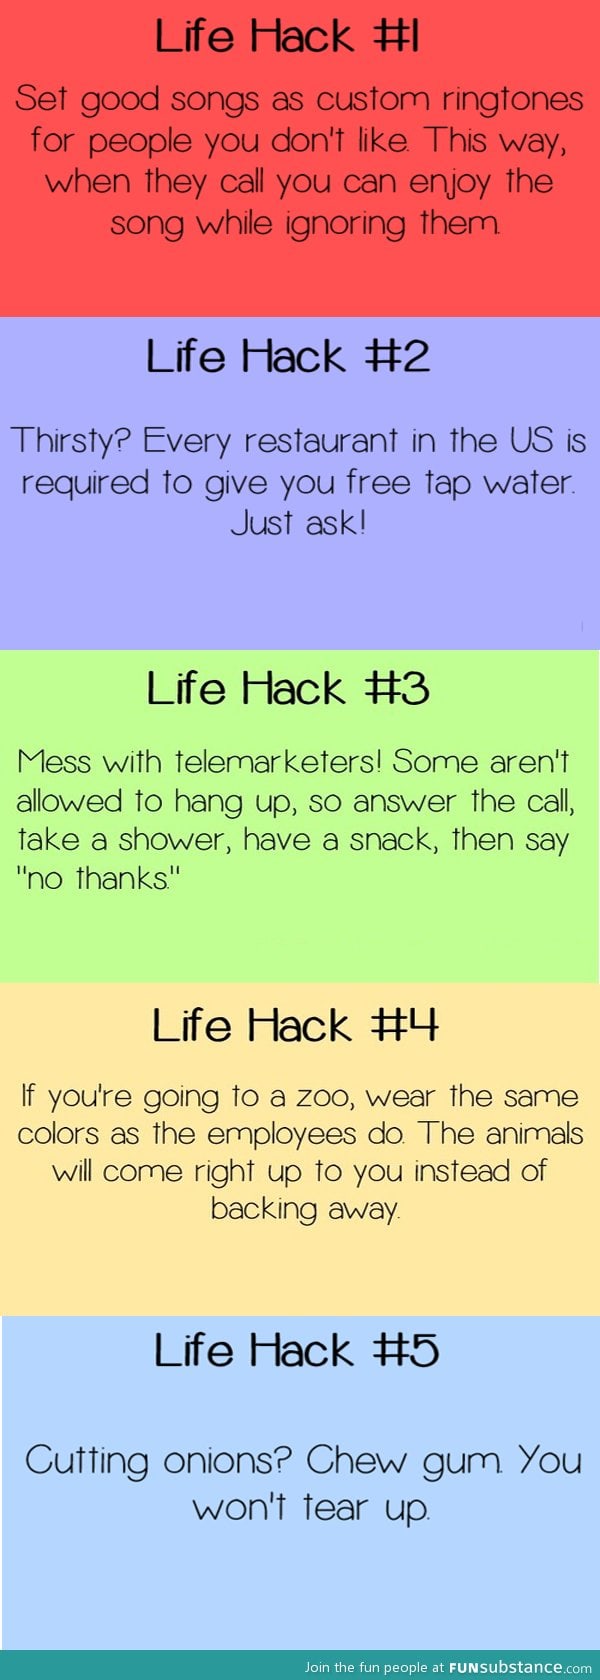 5 life hacks